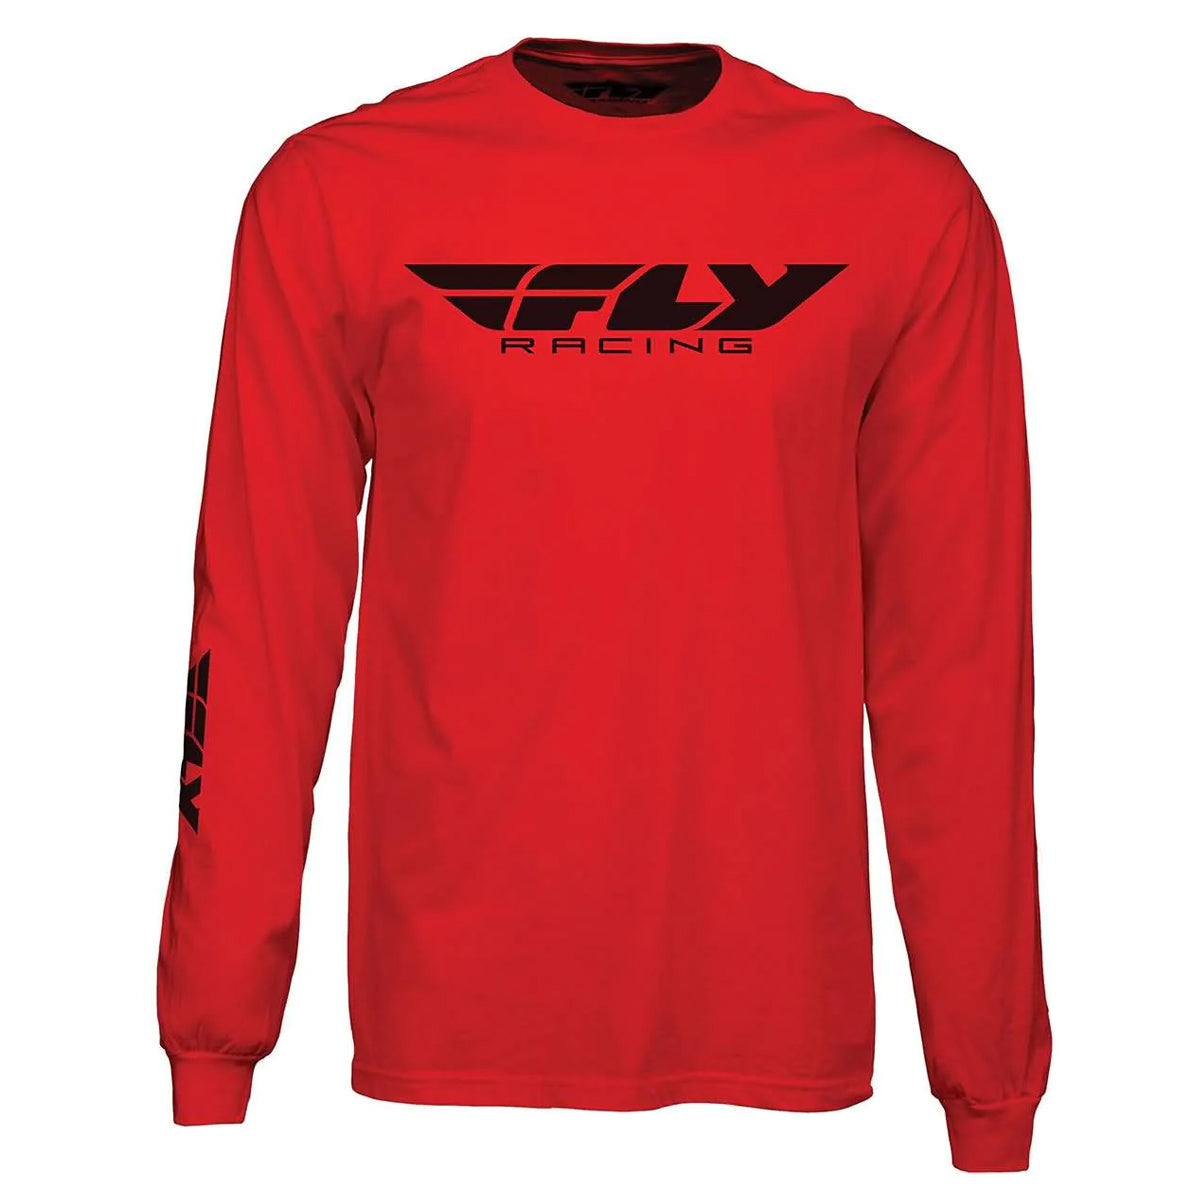 Fly Racing Corporate Men's Long-Sleeve Shirts